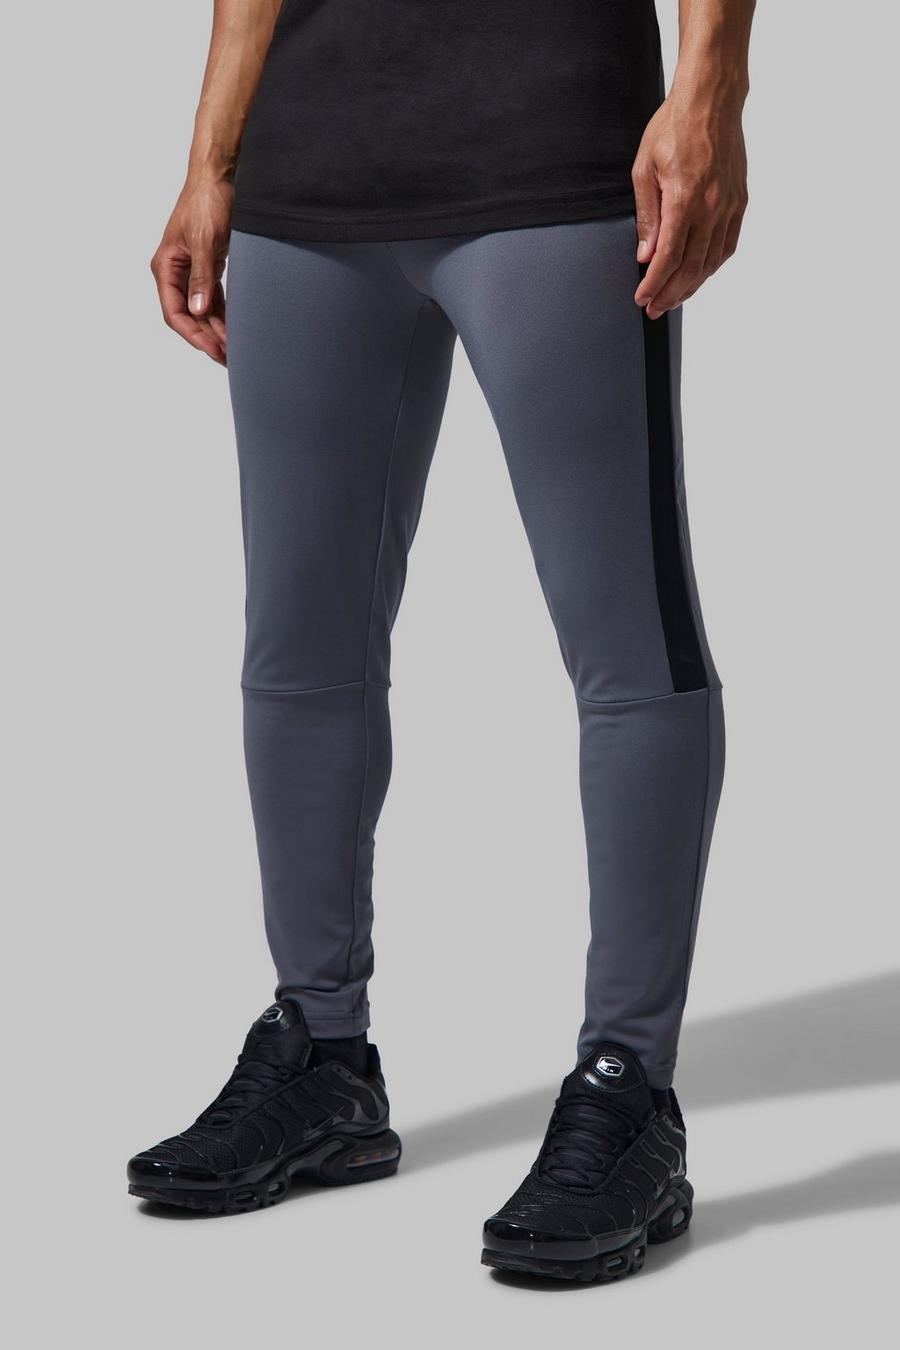 Pantalón deportivo MAN Active resistente de fútbol, Charcoal grey